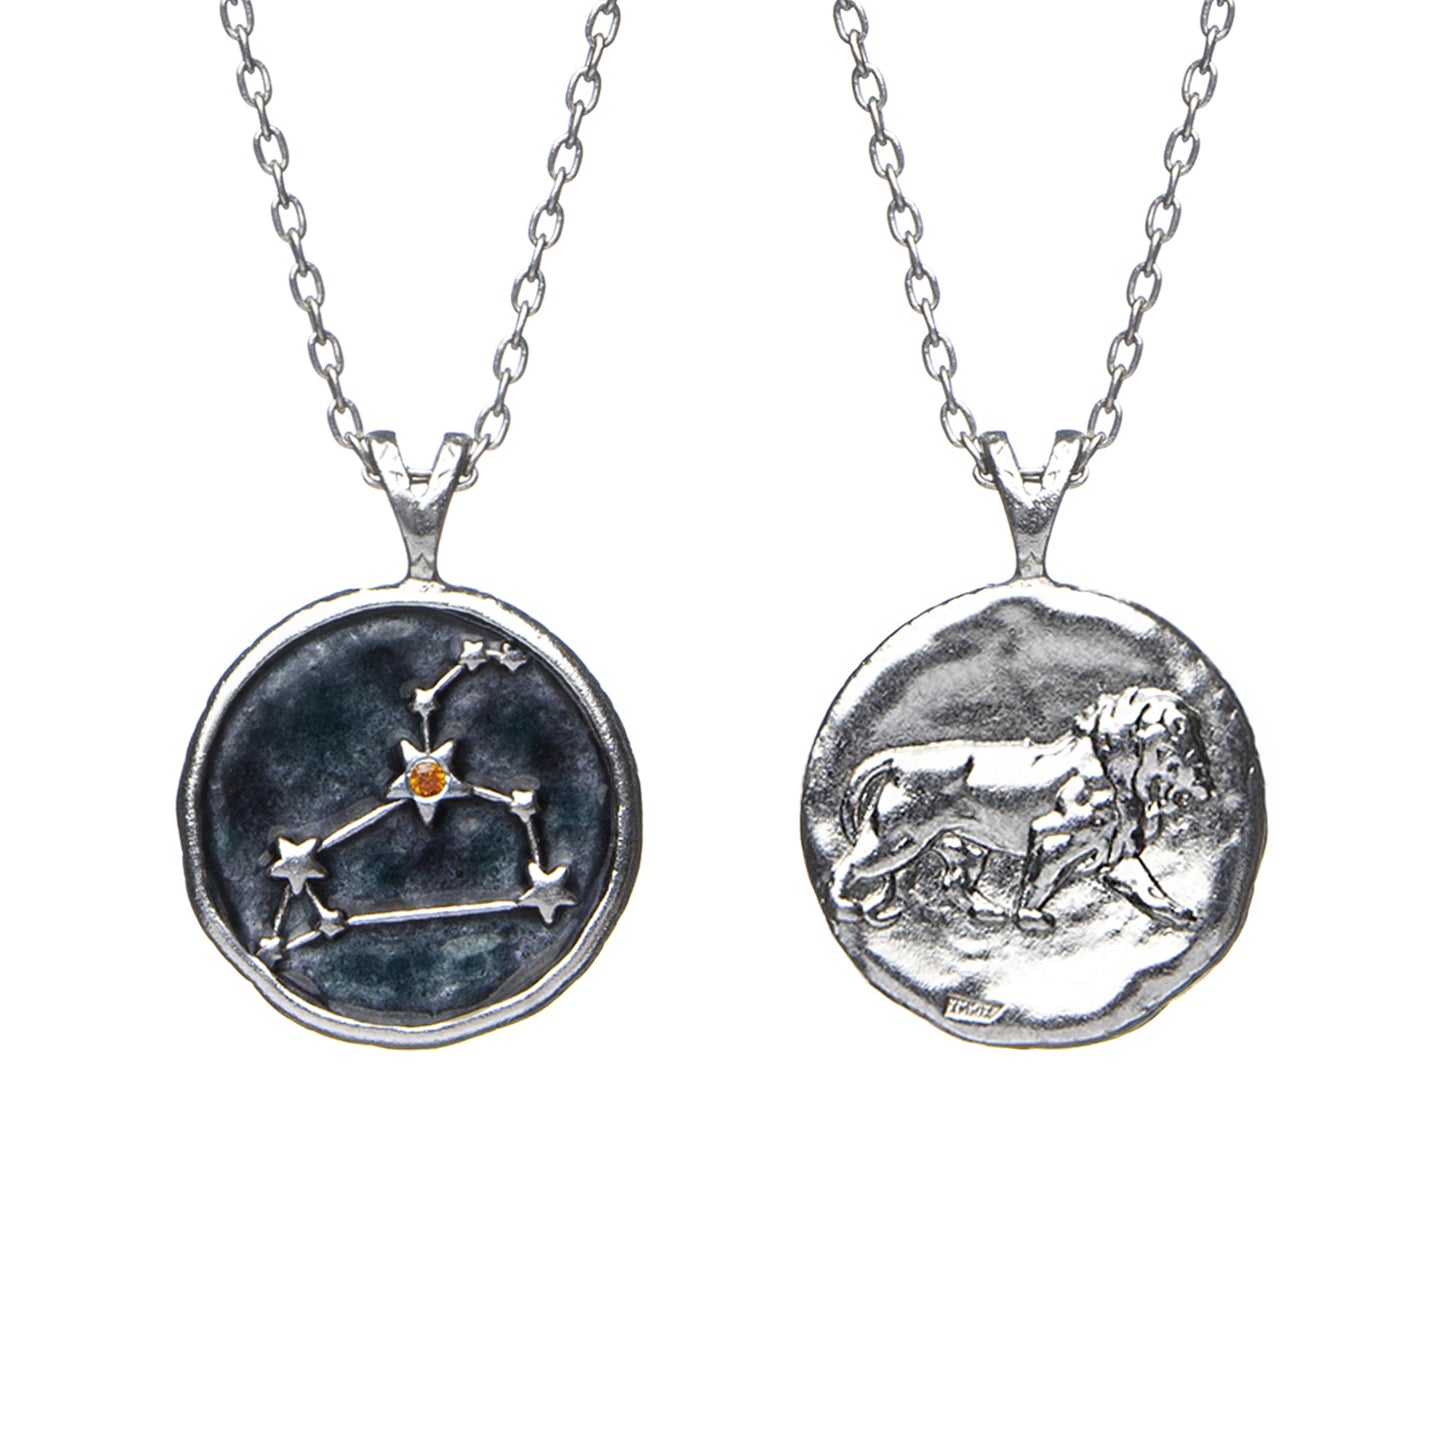 Pendant, Zodiac sign Leo on a chain, sterling  silver